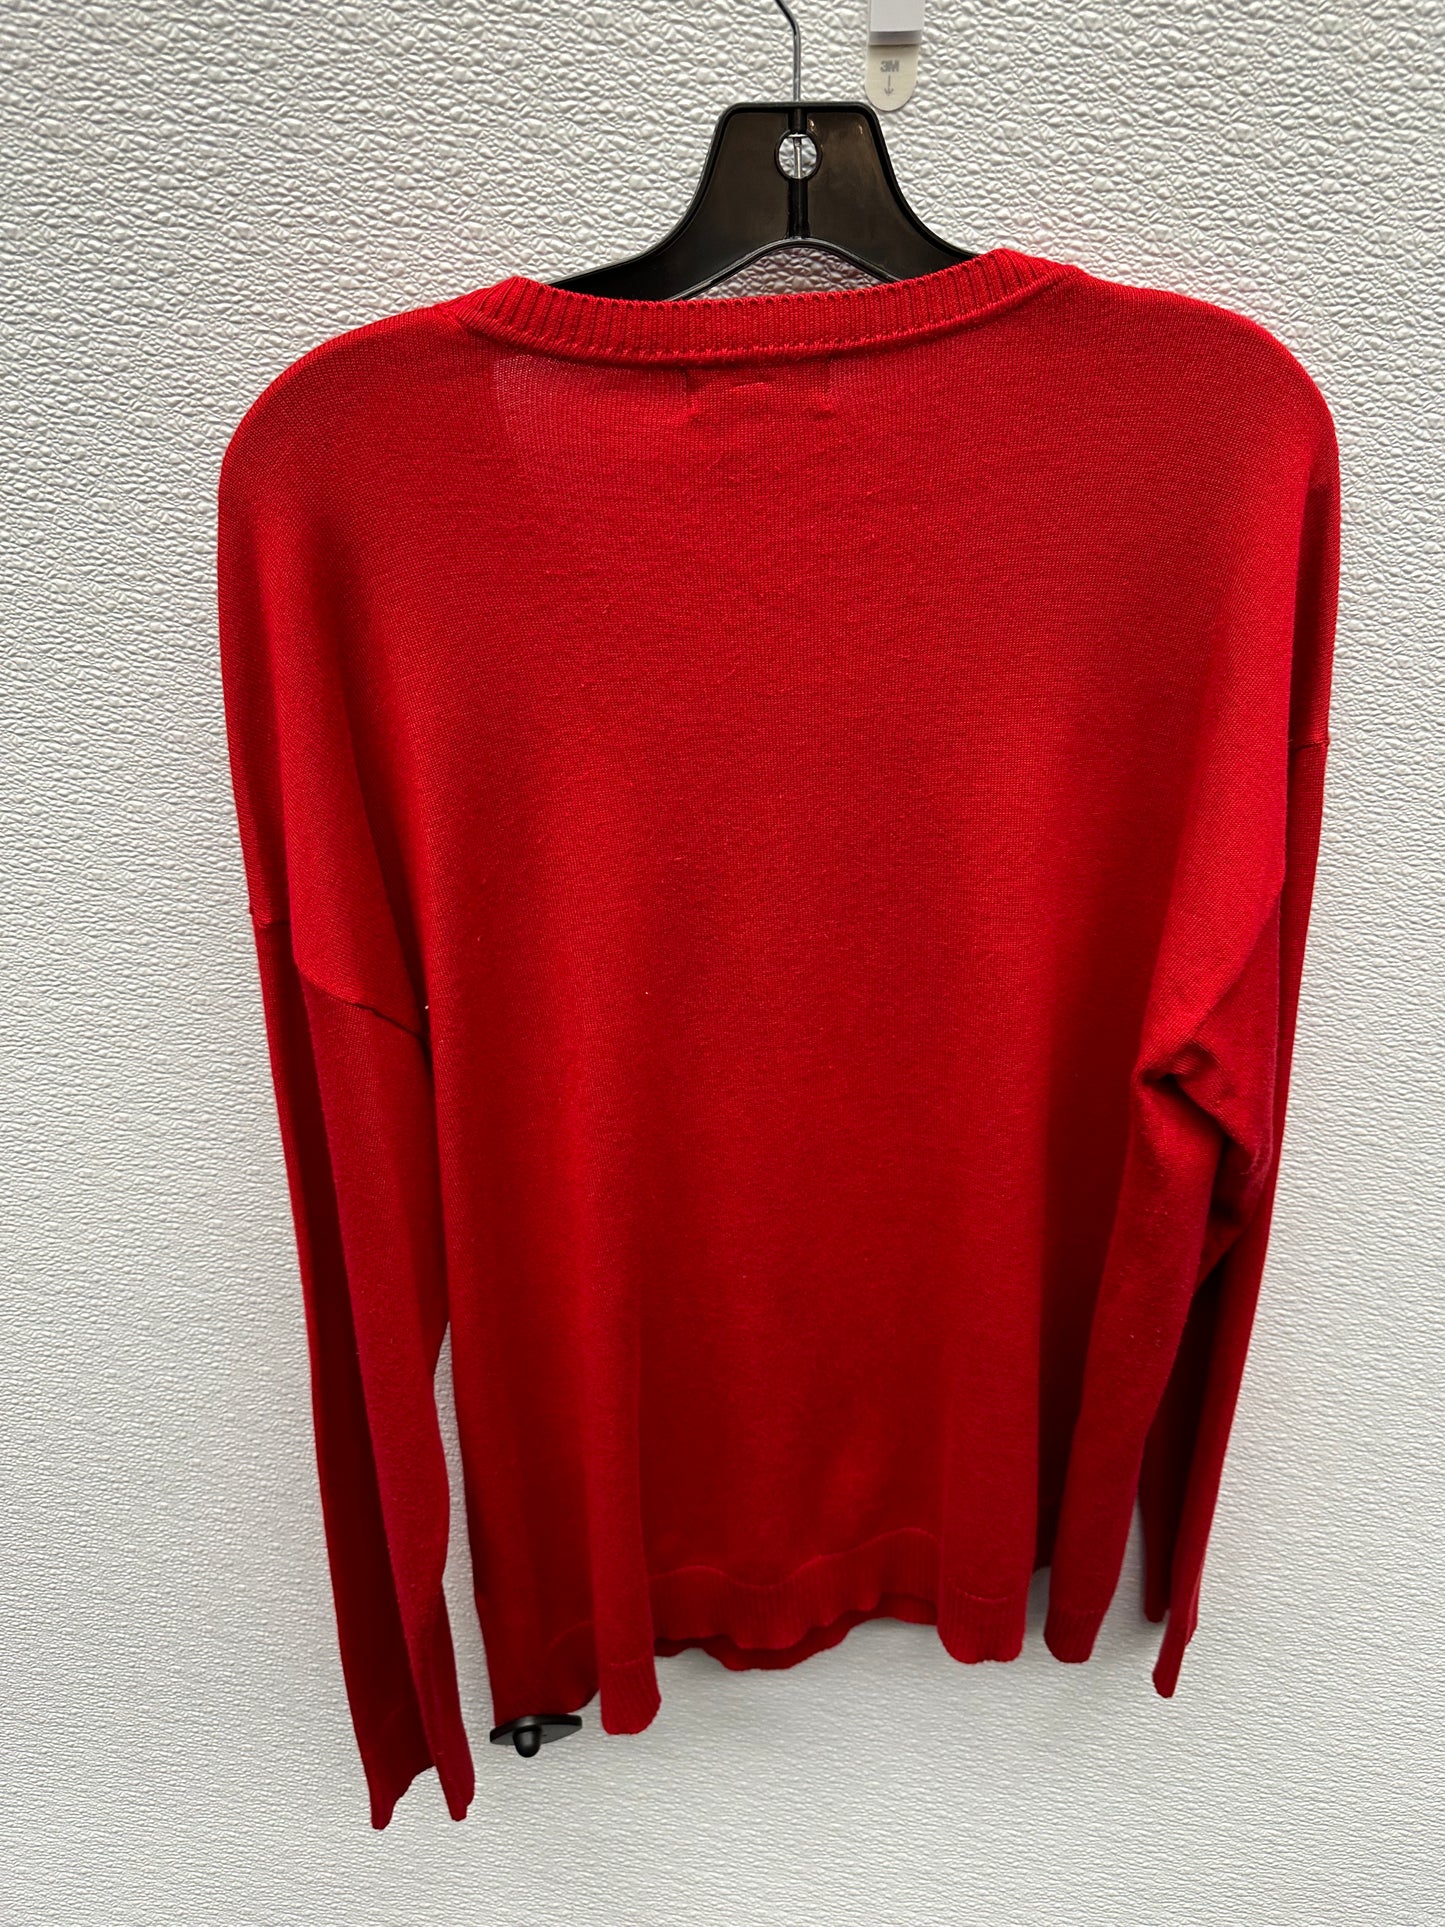 Sweater By Dkny  Size: L